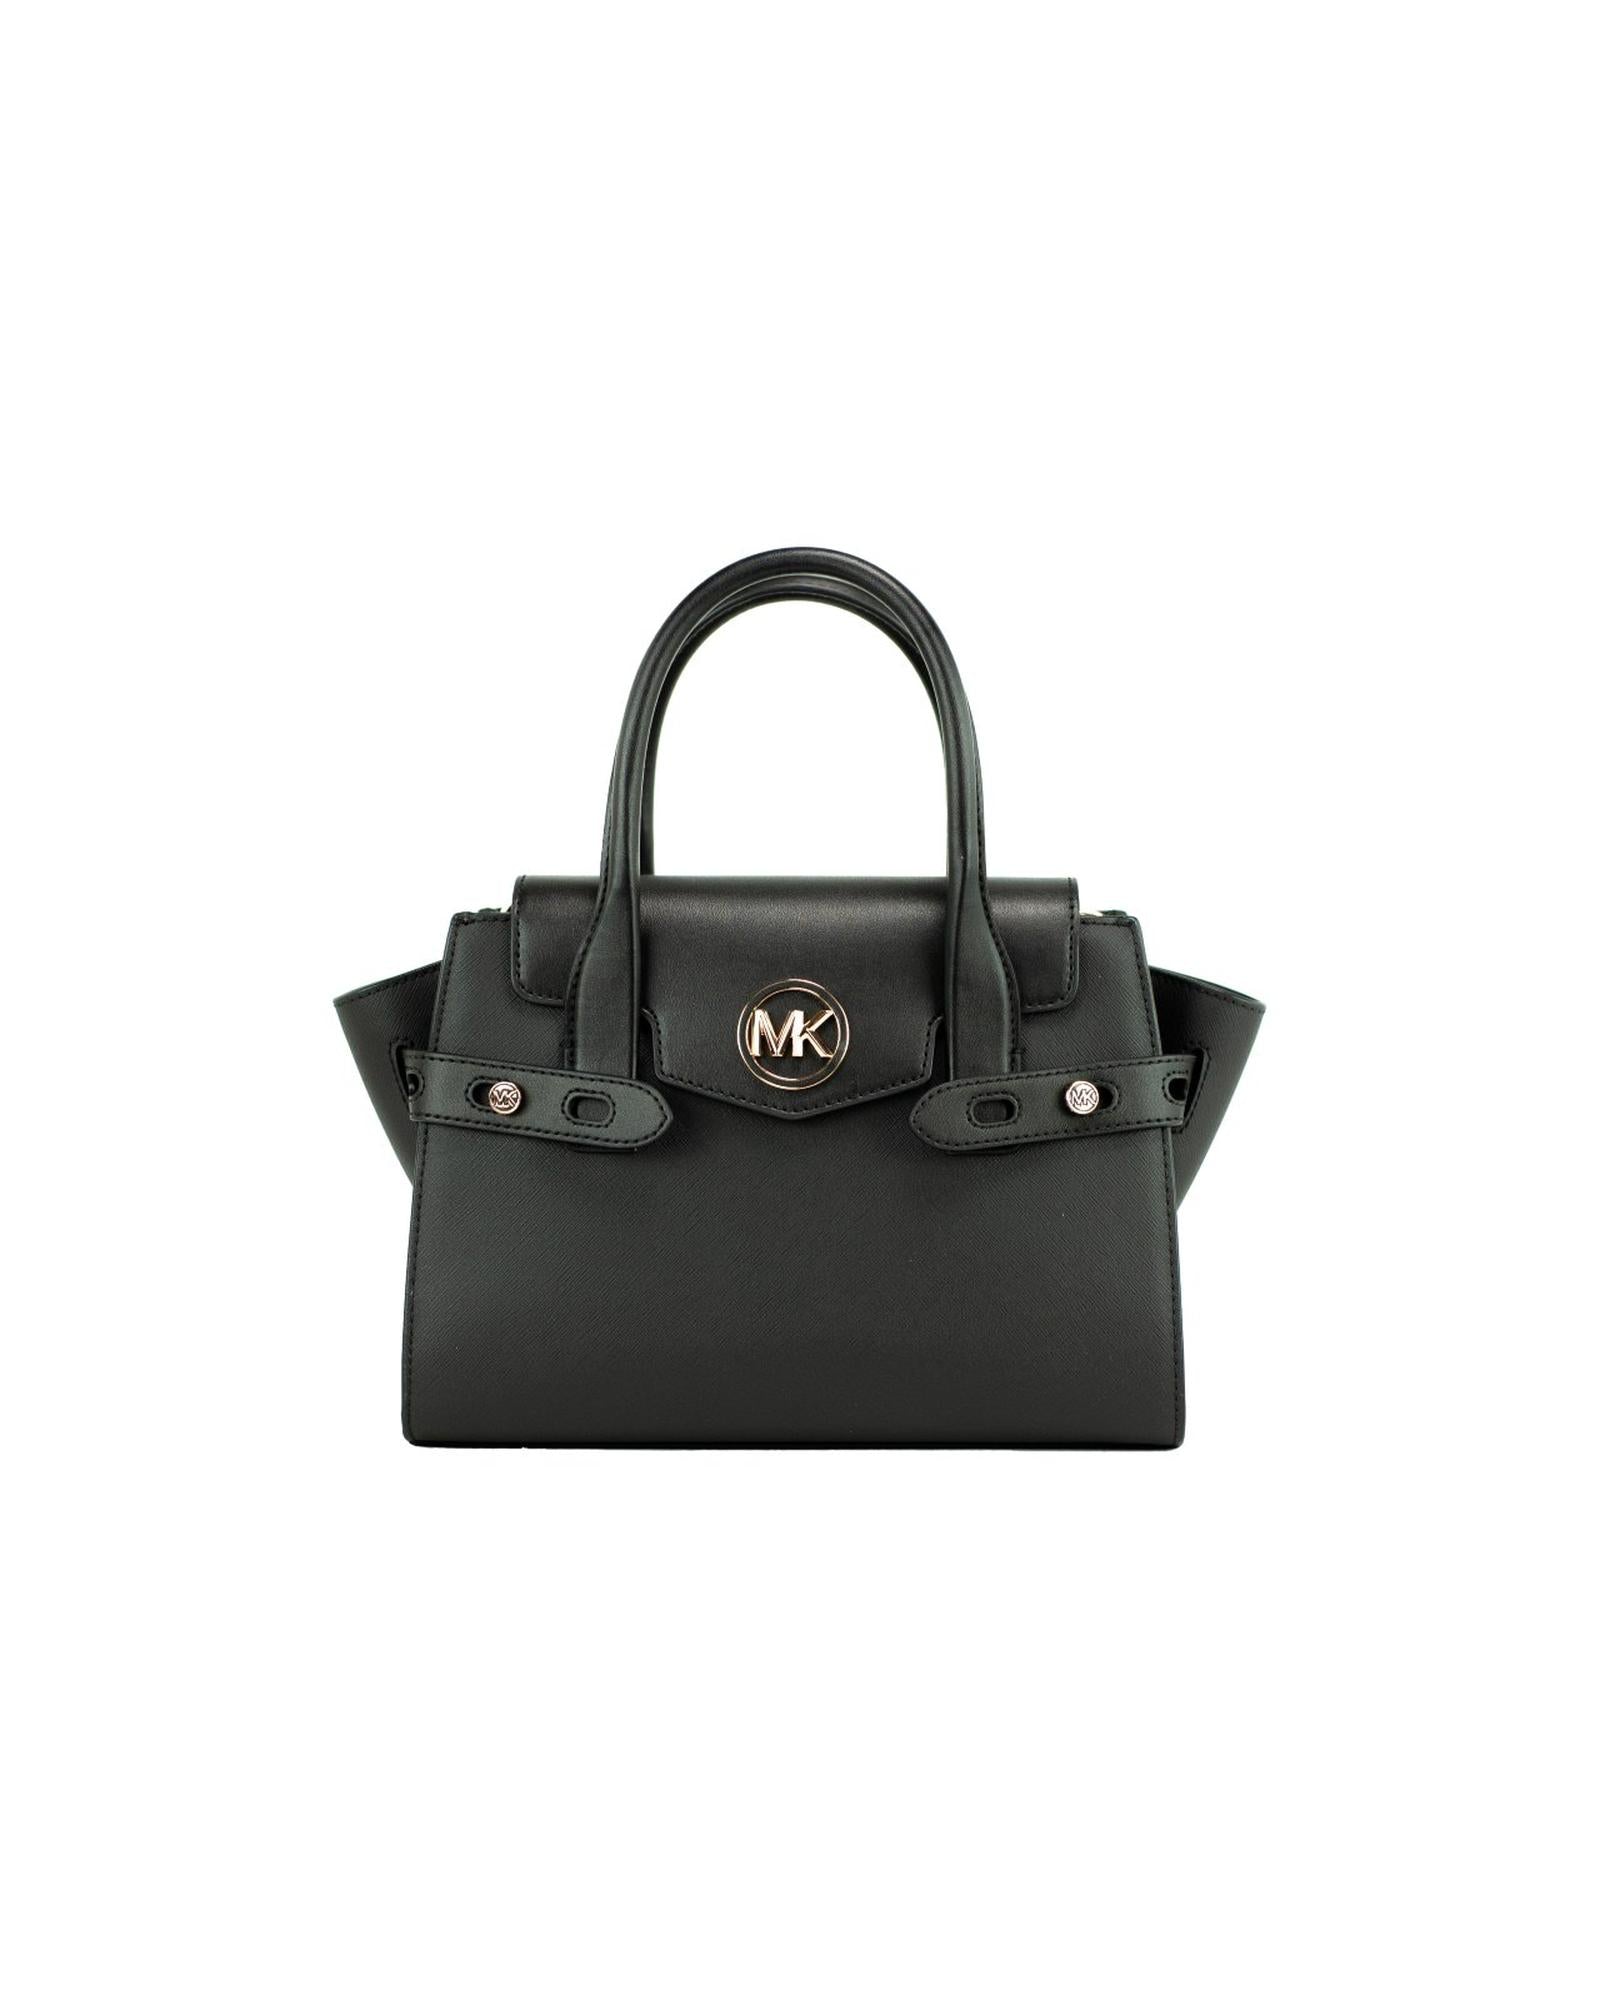 Women's Car Medium Black Gold Saffiano Leather Satchel Handbag Purse Bag - One Size